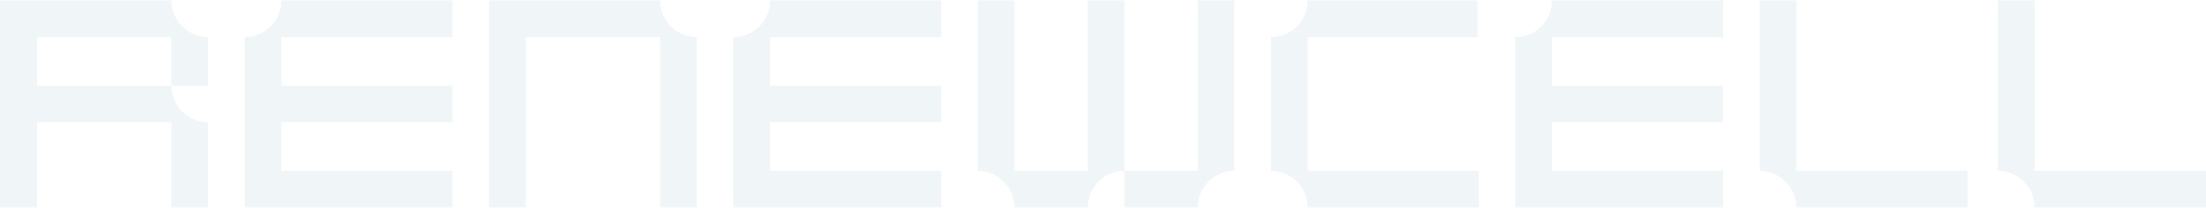 Re:NewCell logo